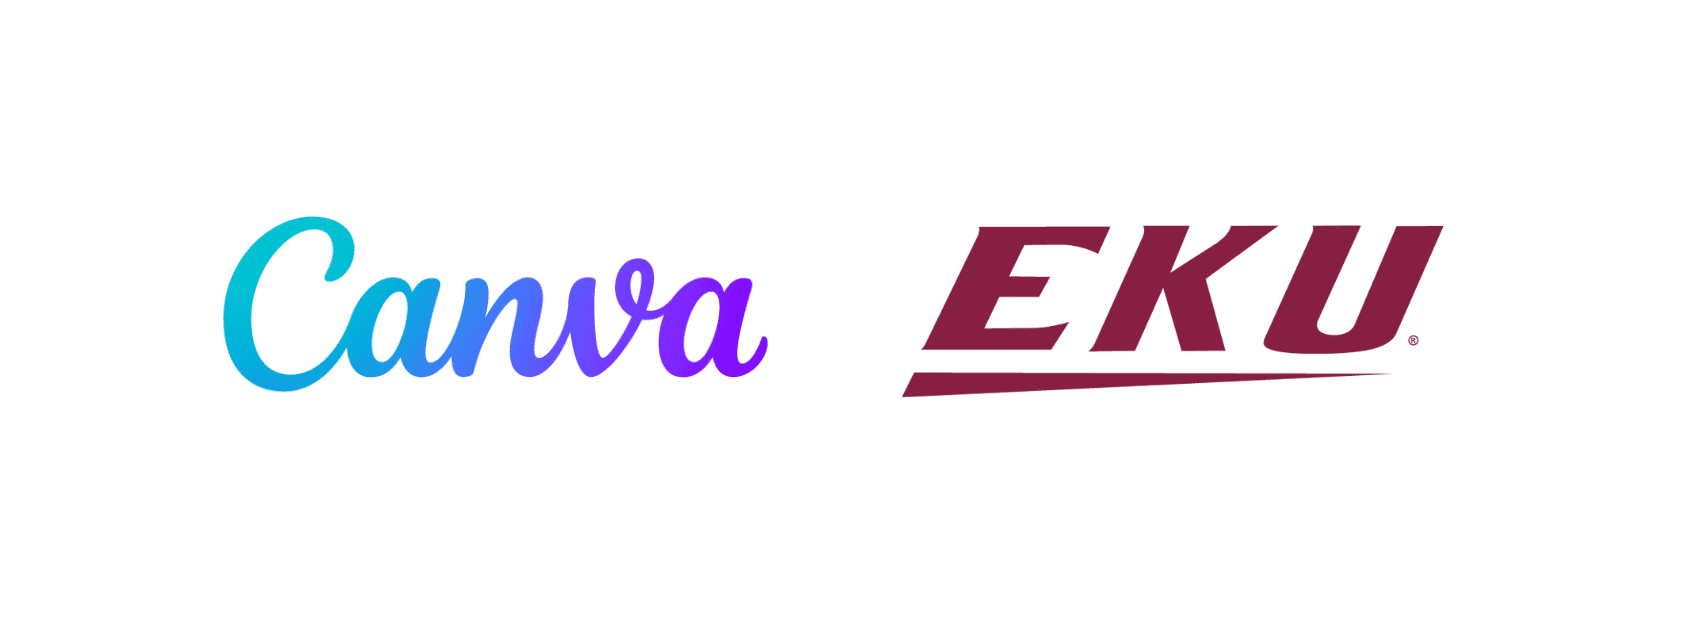 logos for canva and EKU